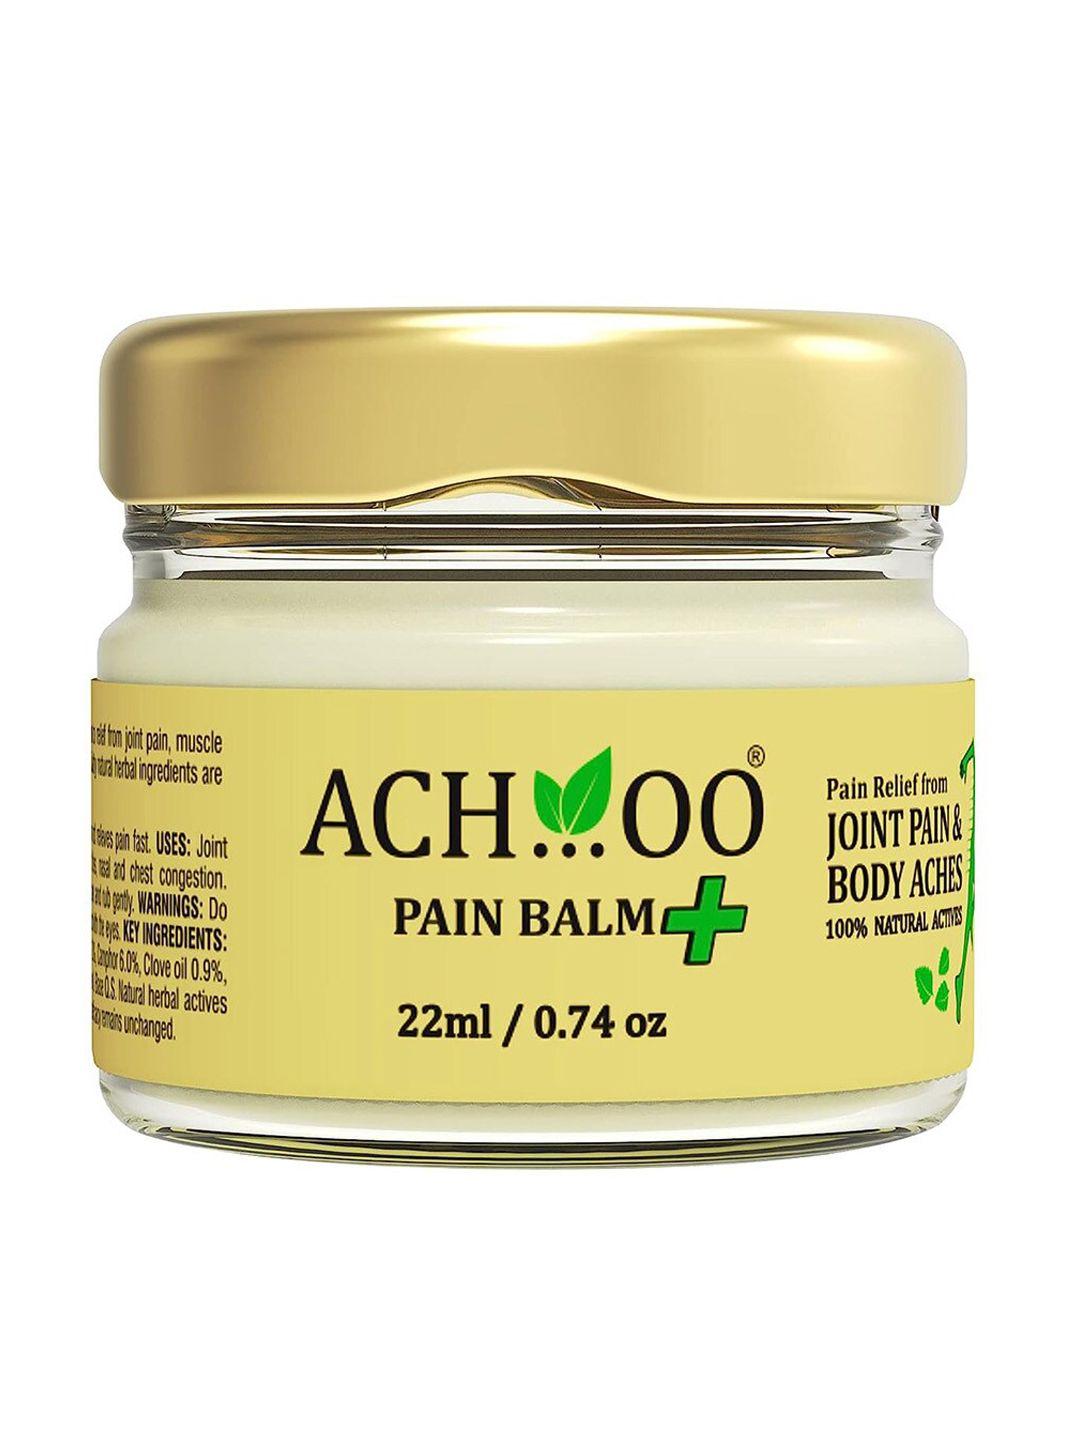 achoo pain balm+ for joint pain & body aches - 22ml